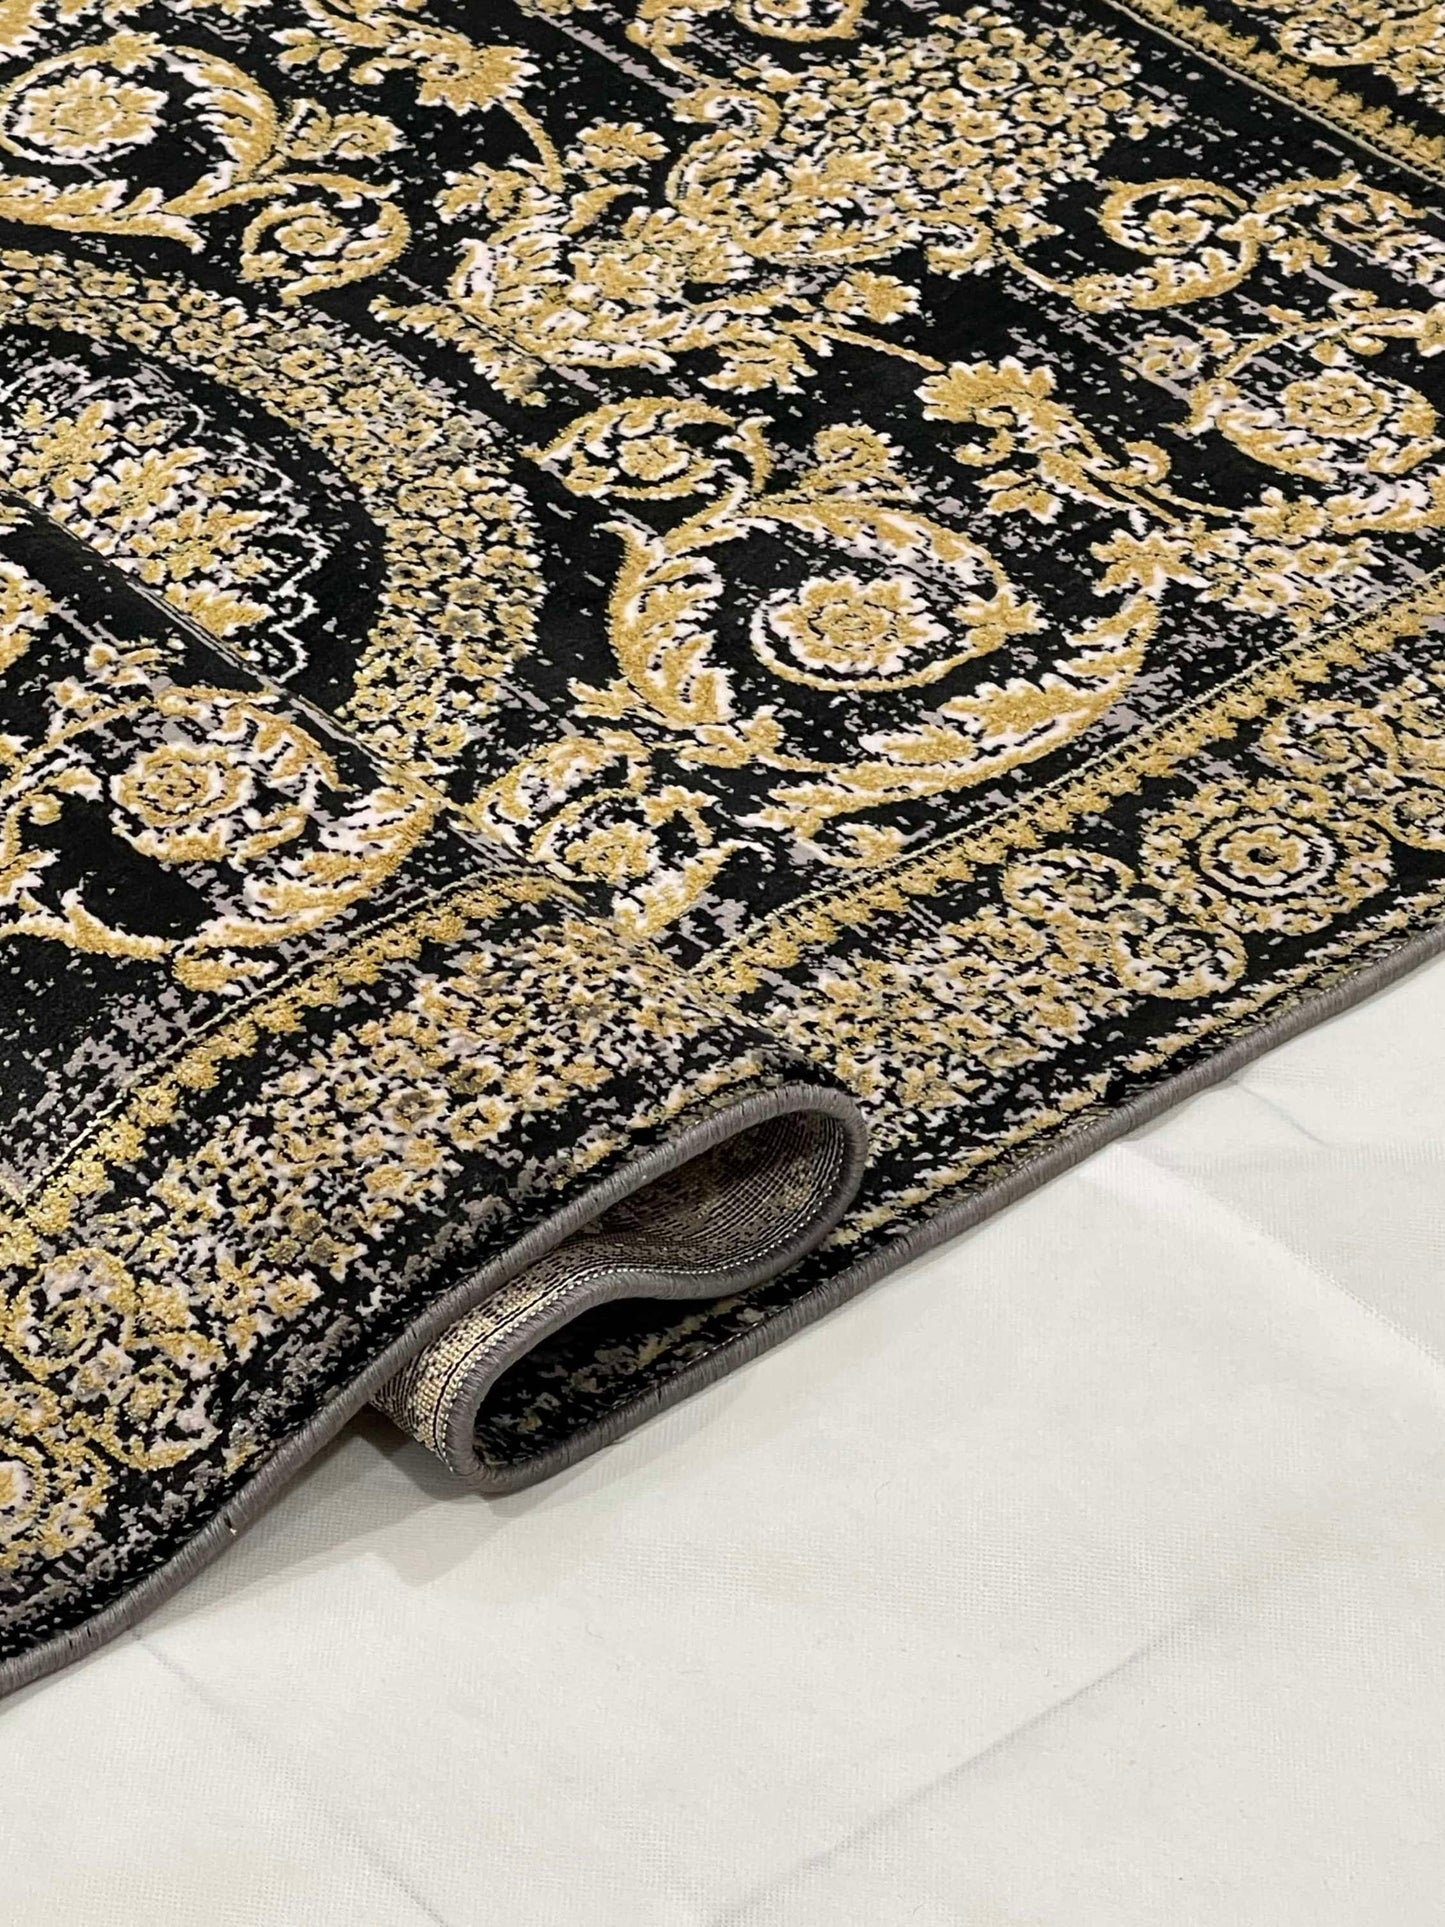 Irani Silk Woven Rug. Size : 3 Ft Width X 5 Ft Length ( 100cm X 150cm)